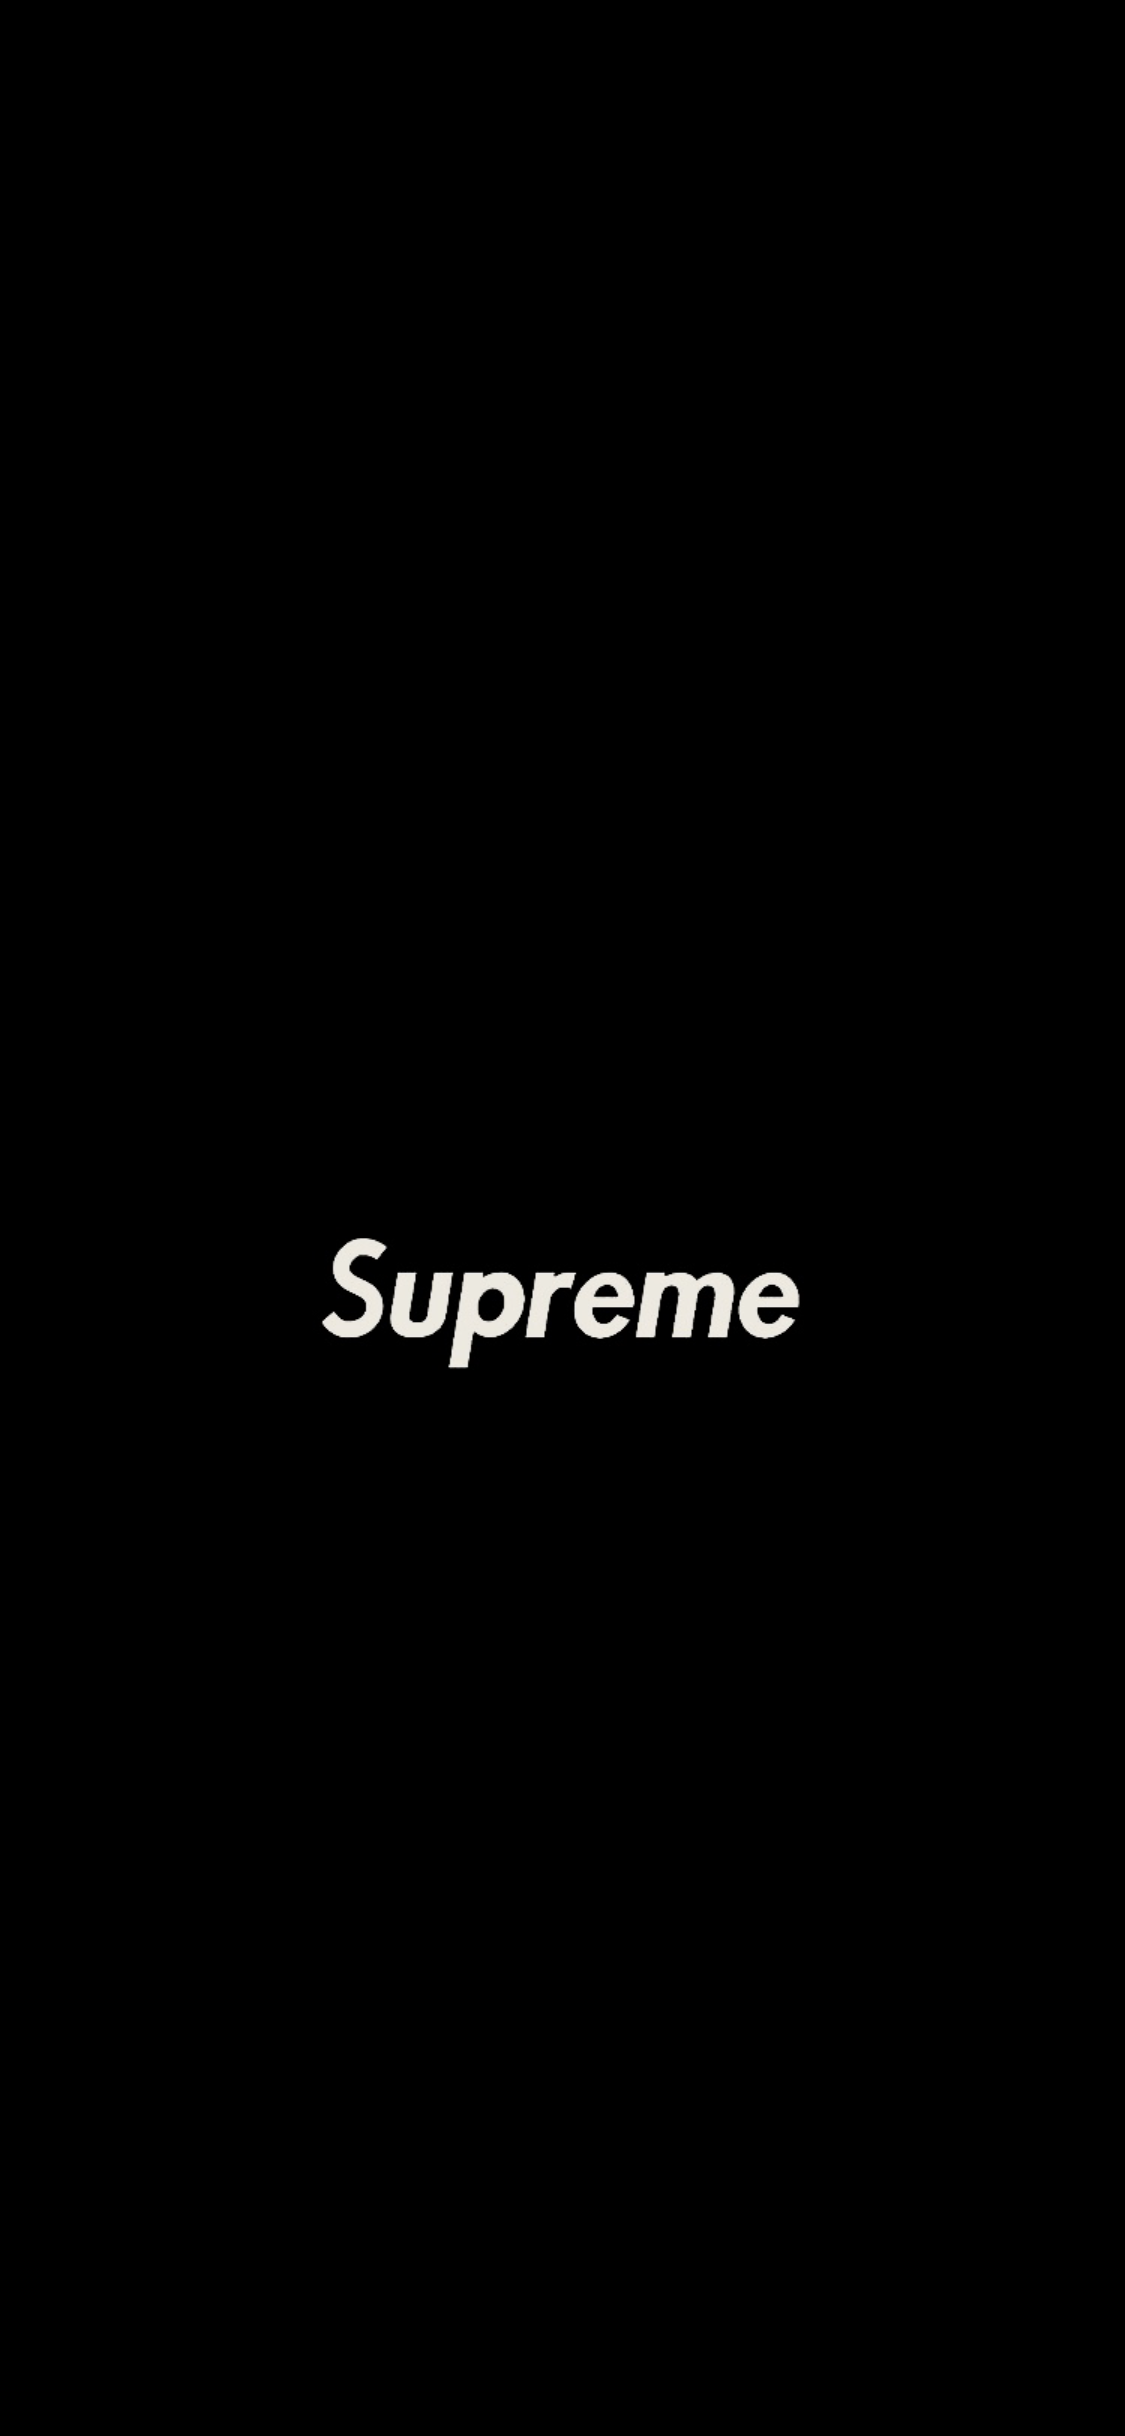 Supreme X Hypebeast iphone wallpaper Logo wallpaper hd Supreme